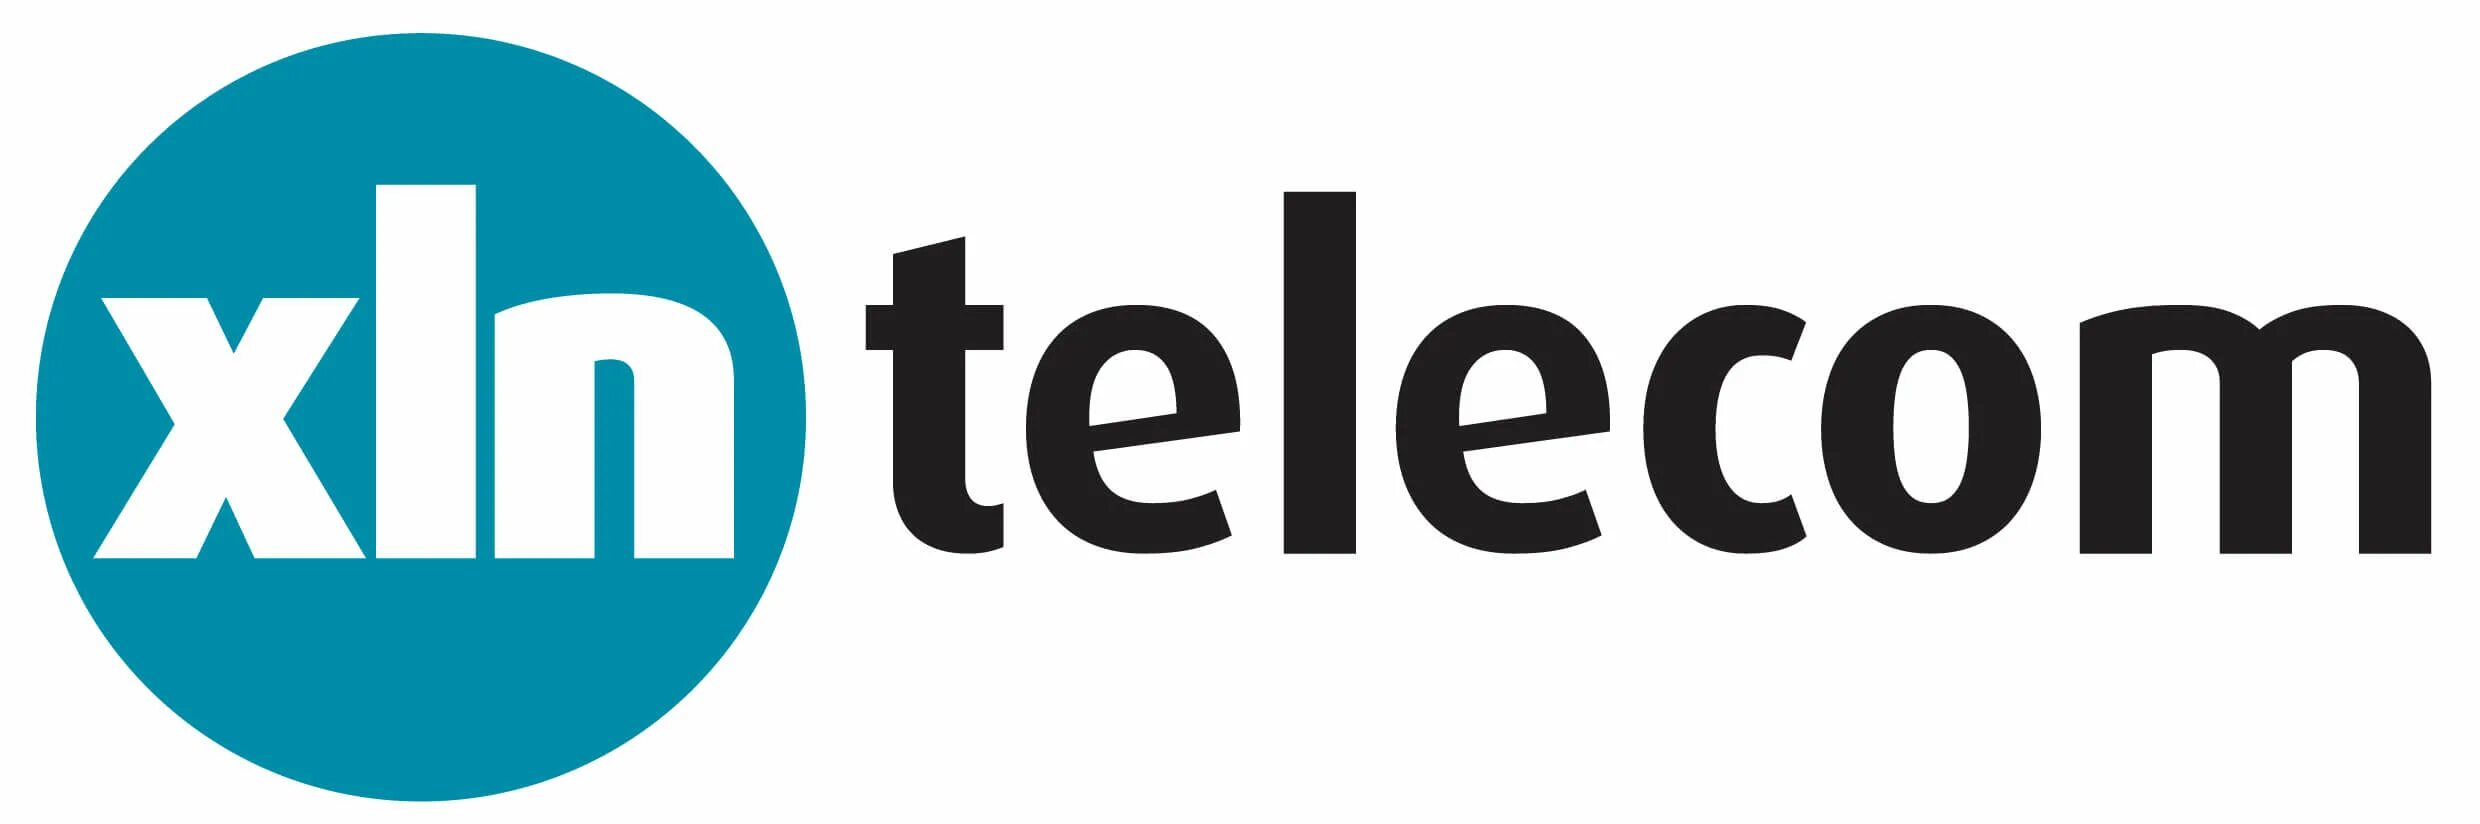 Telecom limited. Telecom logo. Telecommunications лого. Hosser Telecom логотип. Intracom Telecom лого.